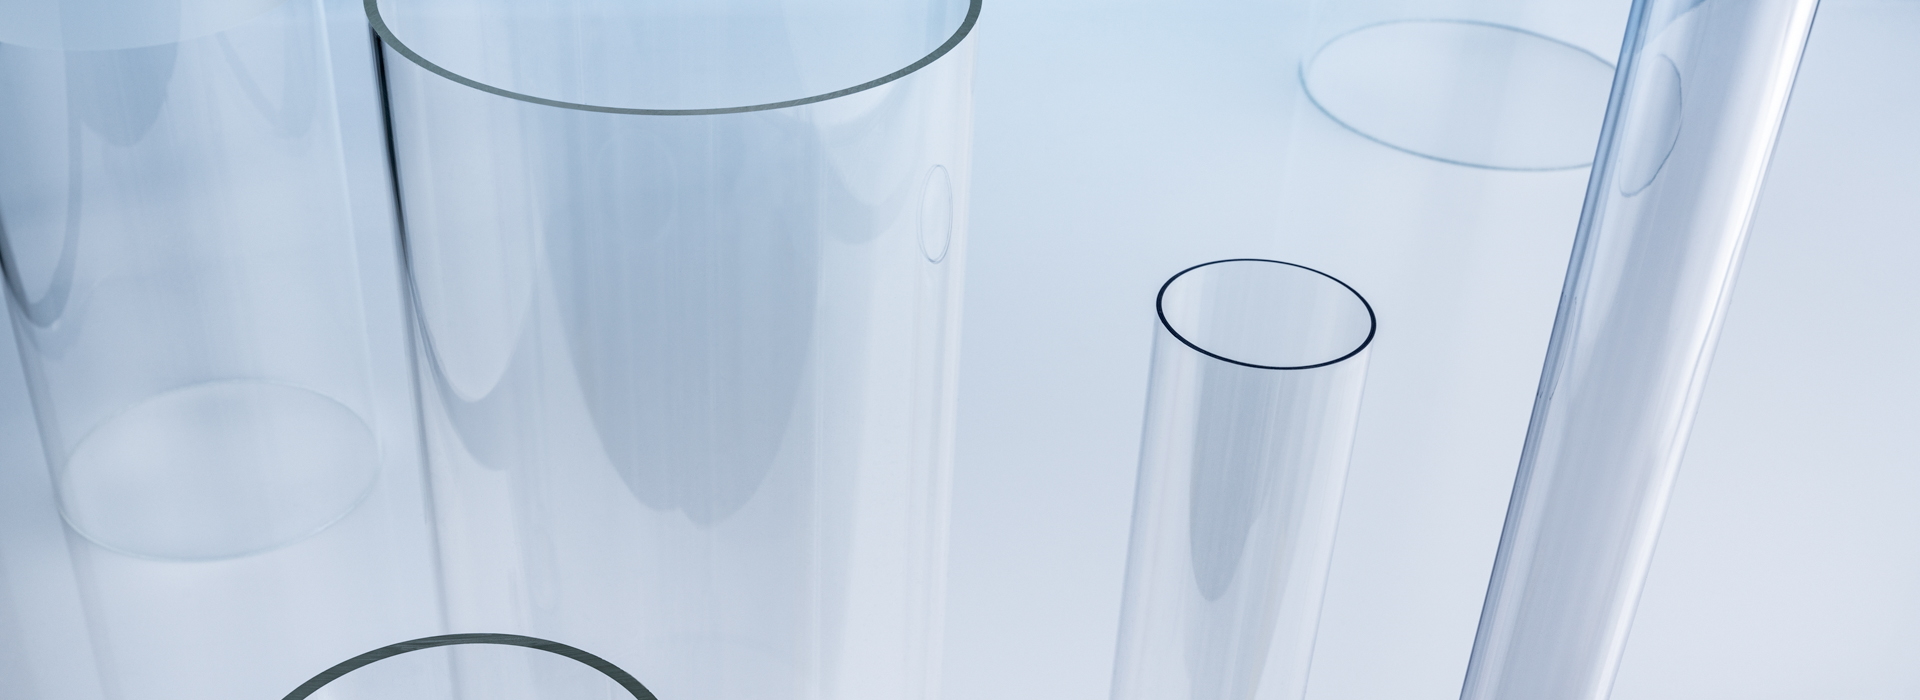 tabelle das polymethyl methacrylat acryl vorstand organisches glas plexiglas 